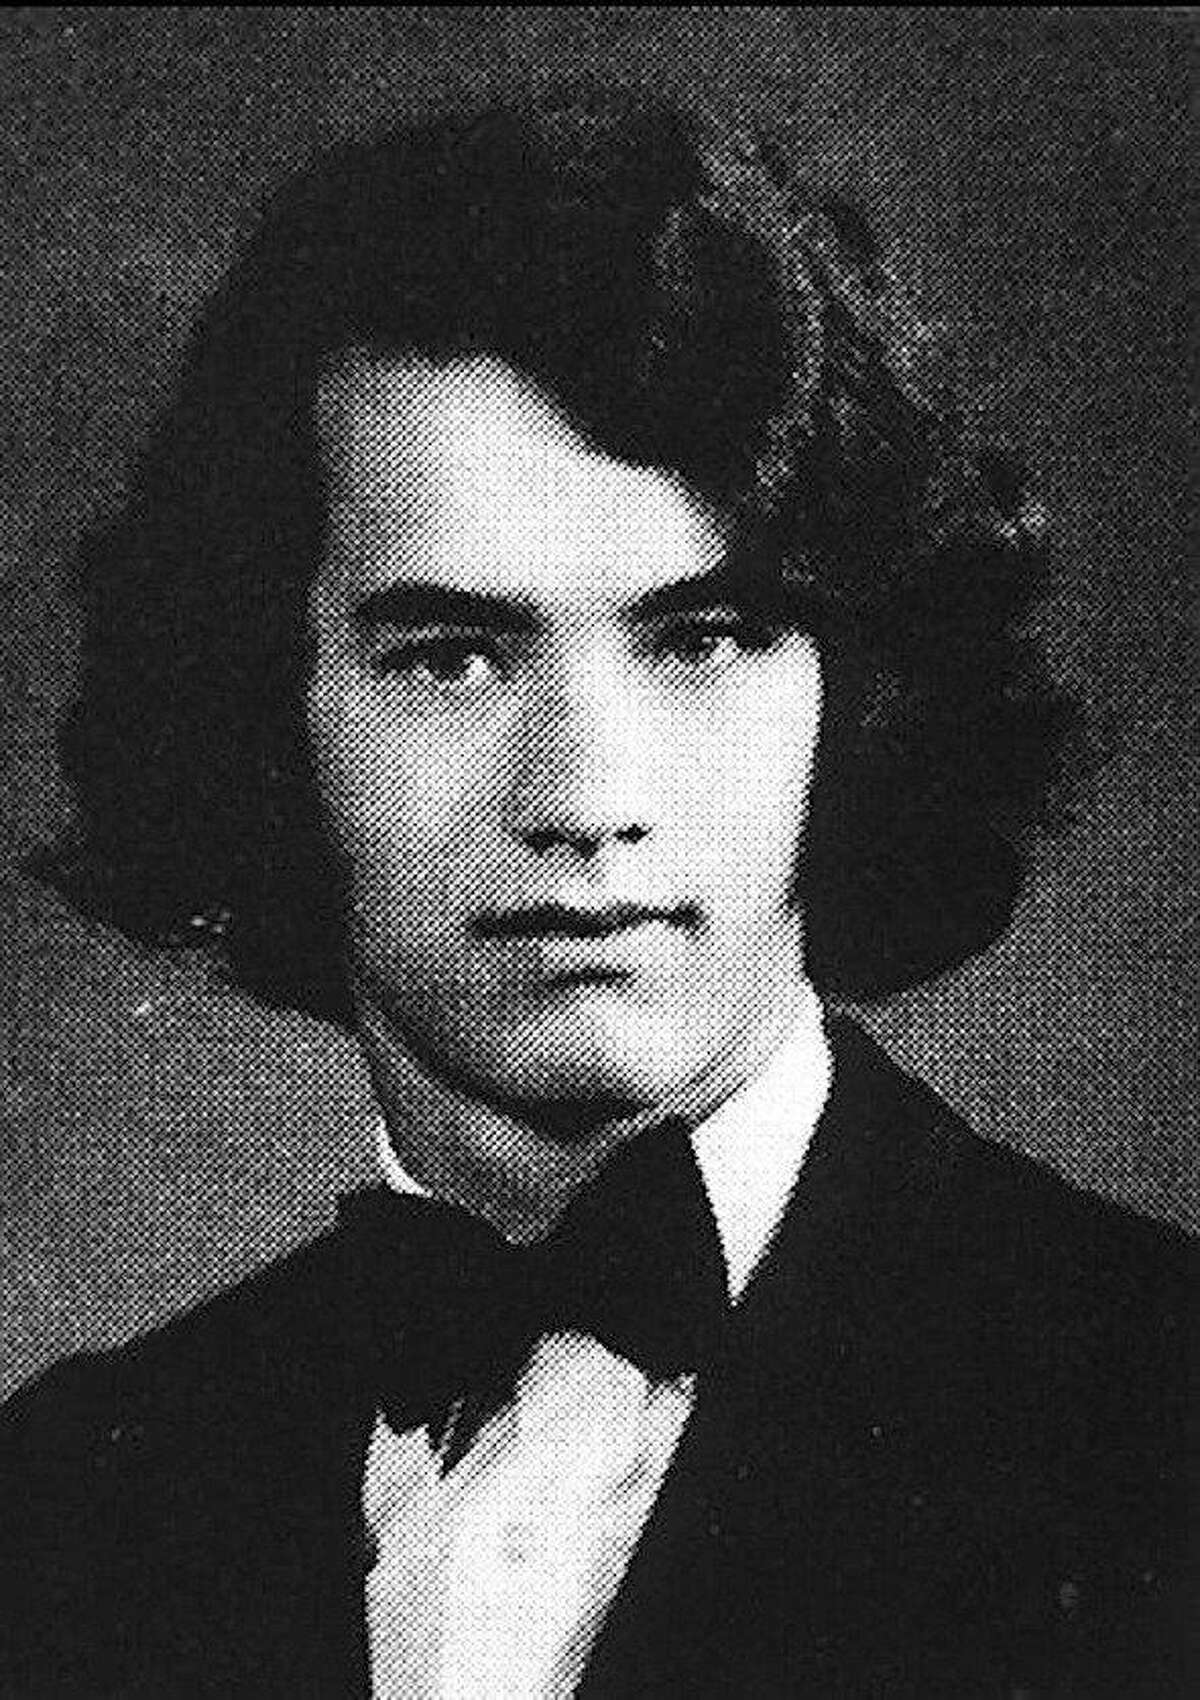 Skyline High School, Oakland Tom Hanks graduated from Oakland's Skyline High School in 1974. This is his senior school photo.